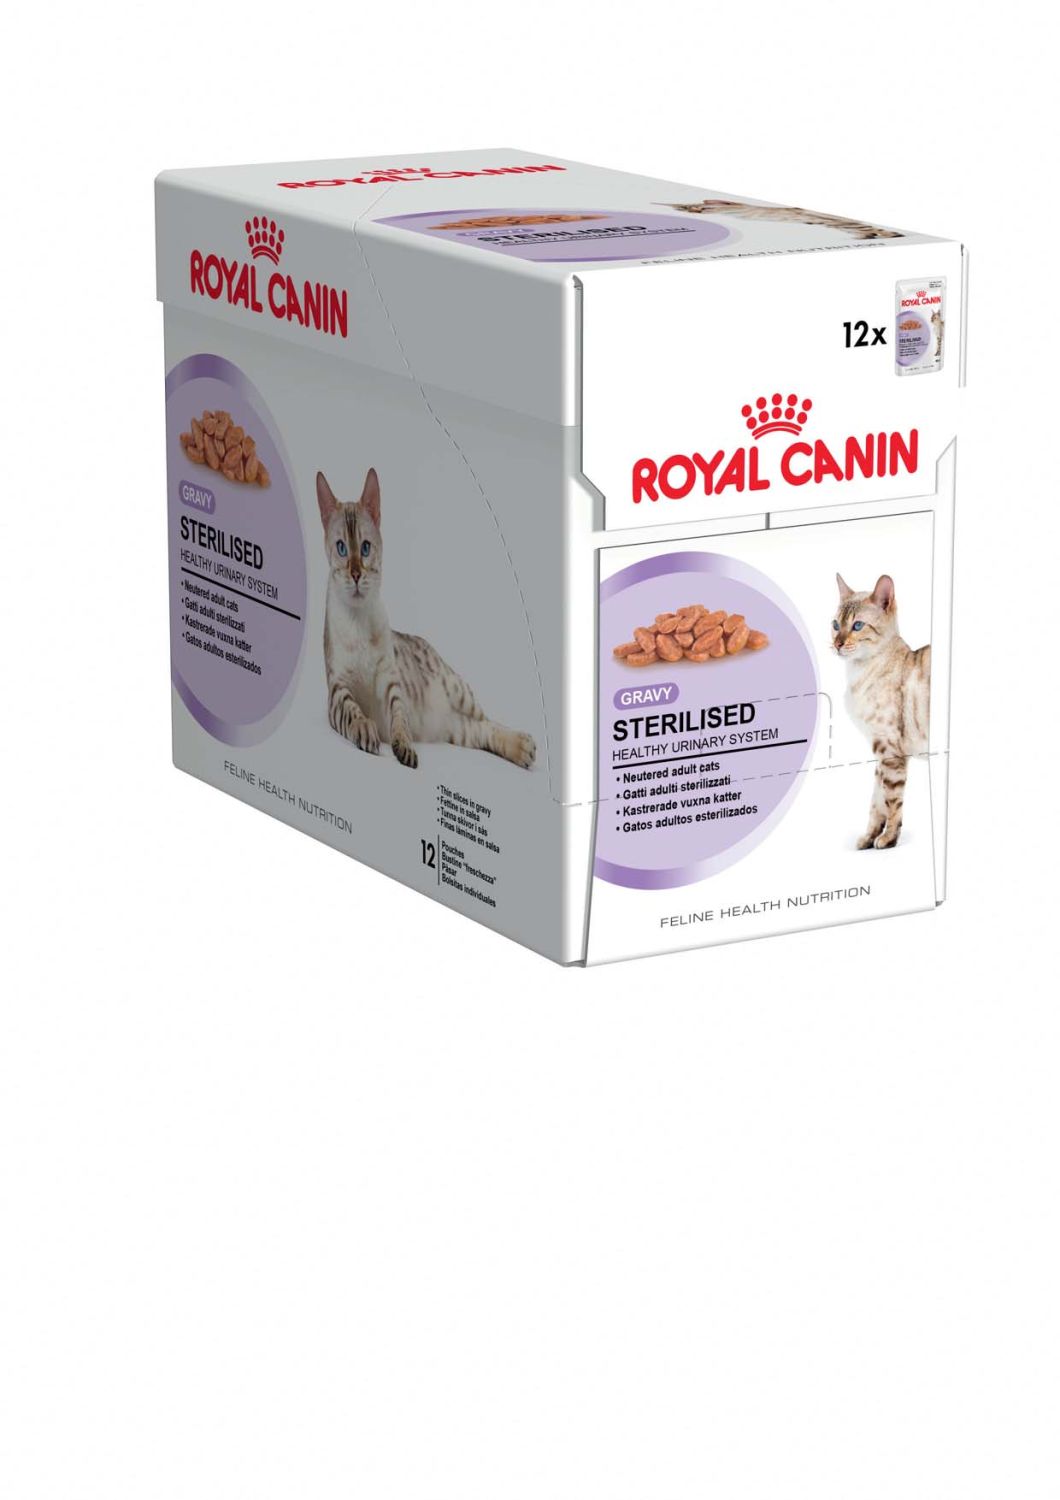 Royal canin в соусе для кошек. Влажный корм для кошек Royal Canin Sterilised. Корм Роял Канин ультра Лайт. Роял Канин ультра Лайт для кошек. Роял Канин влажный корм для кошек ассортимент.